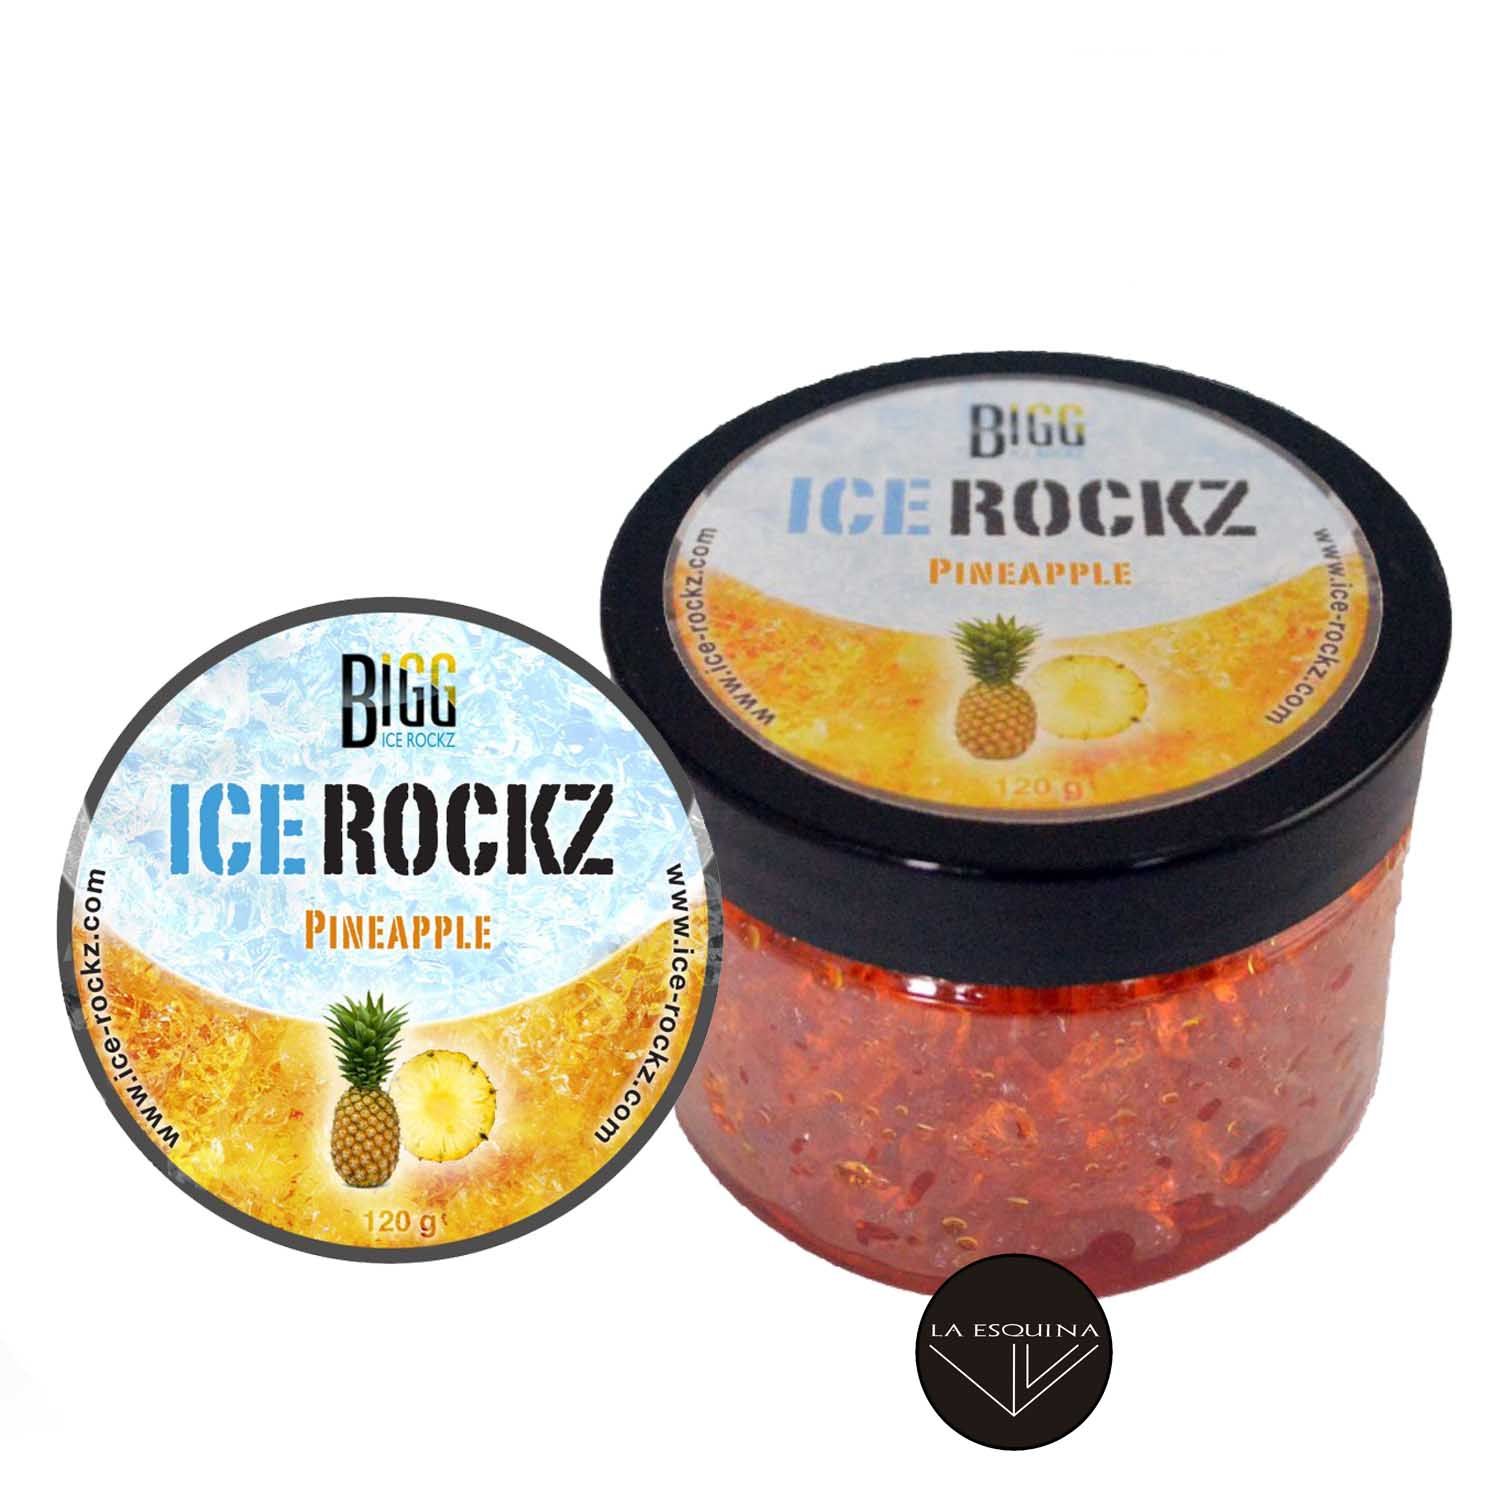 Gel Rock de Cachimba BIGG ICE ROCKZ – 120 g. – Pineapple